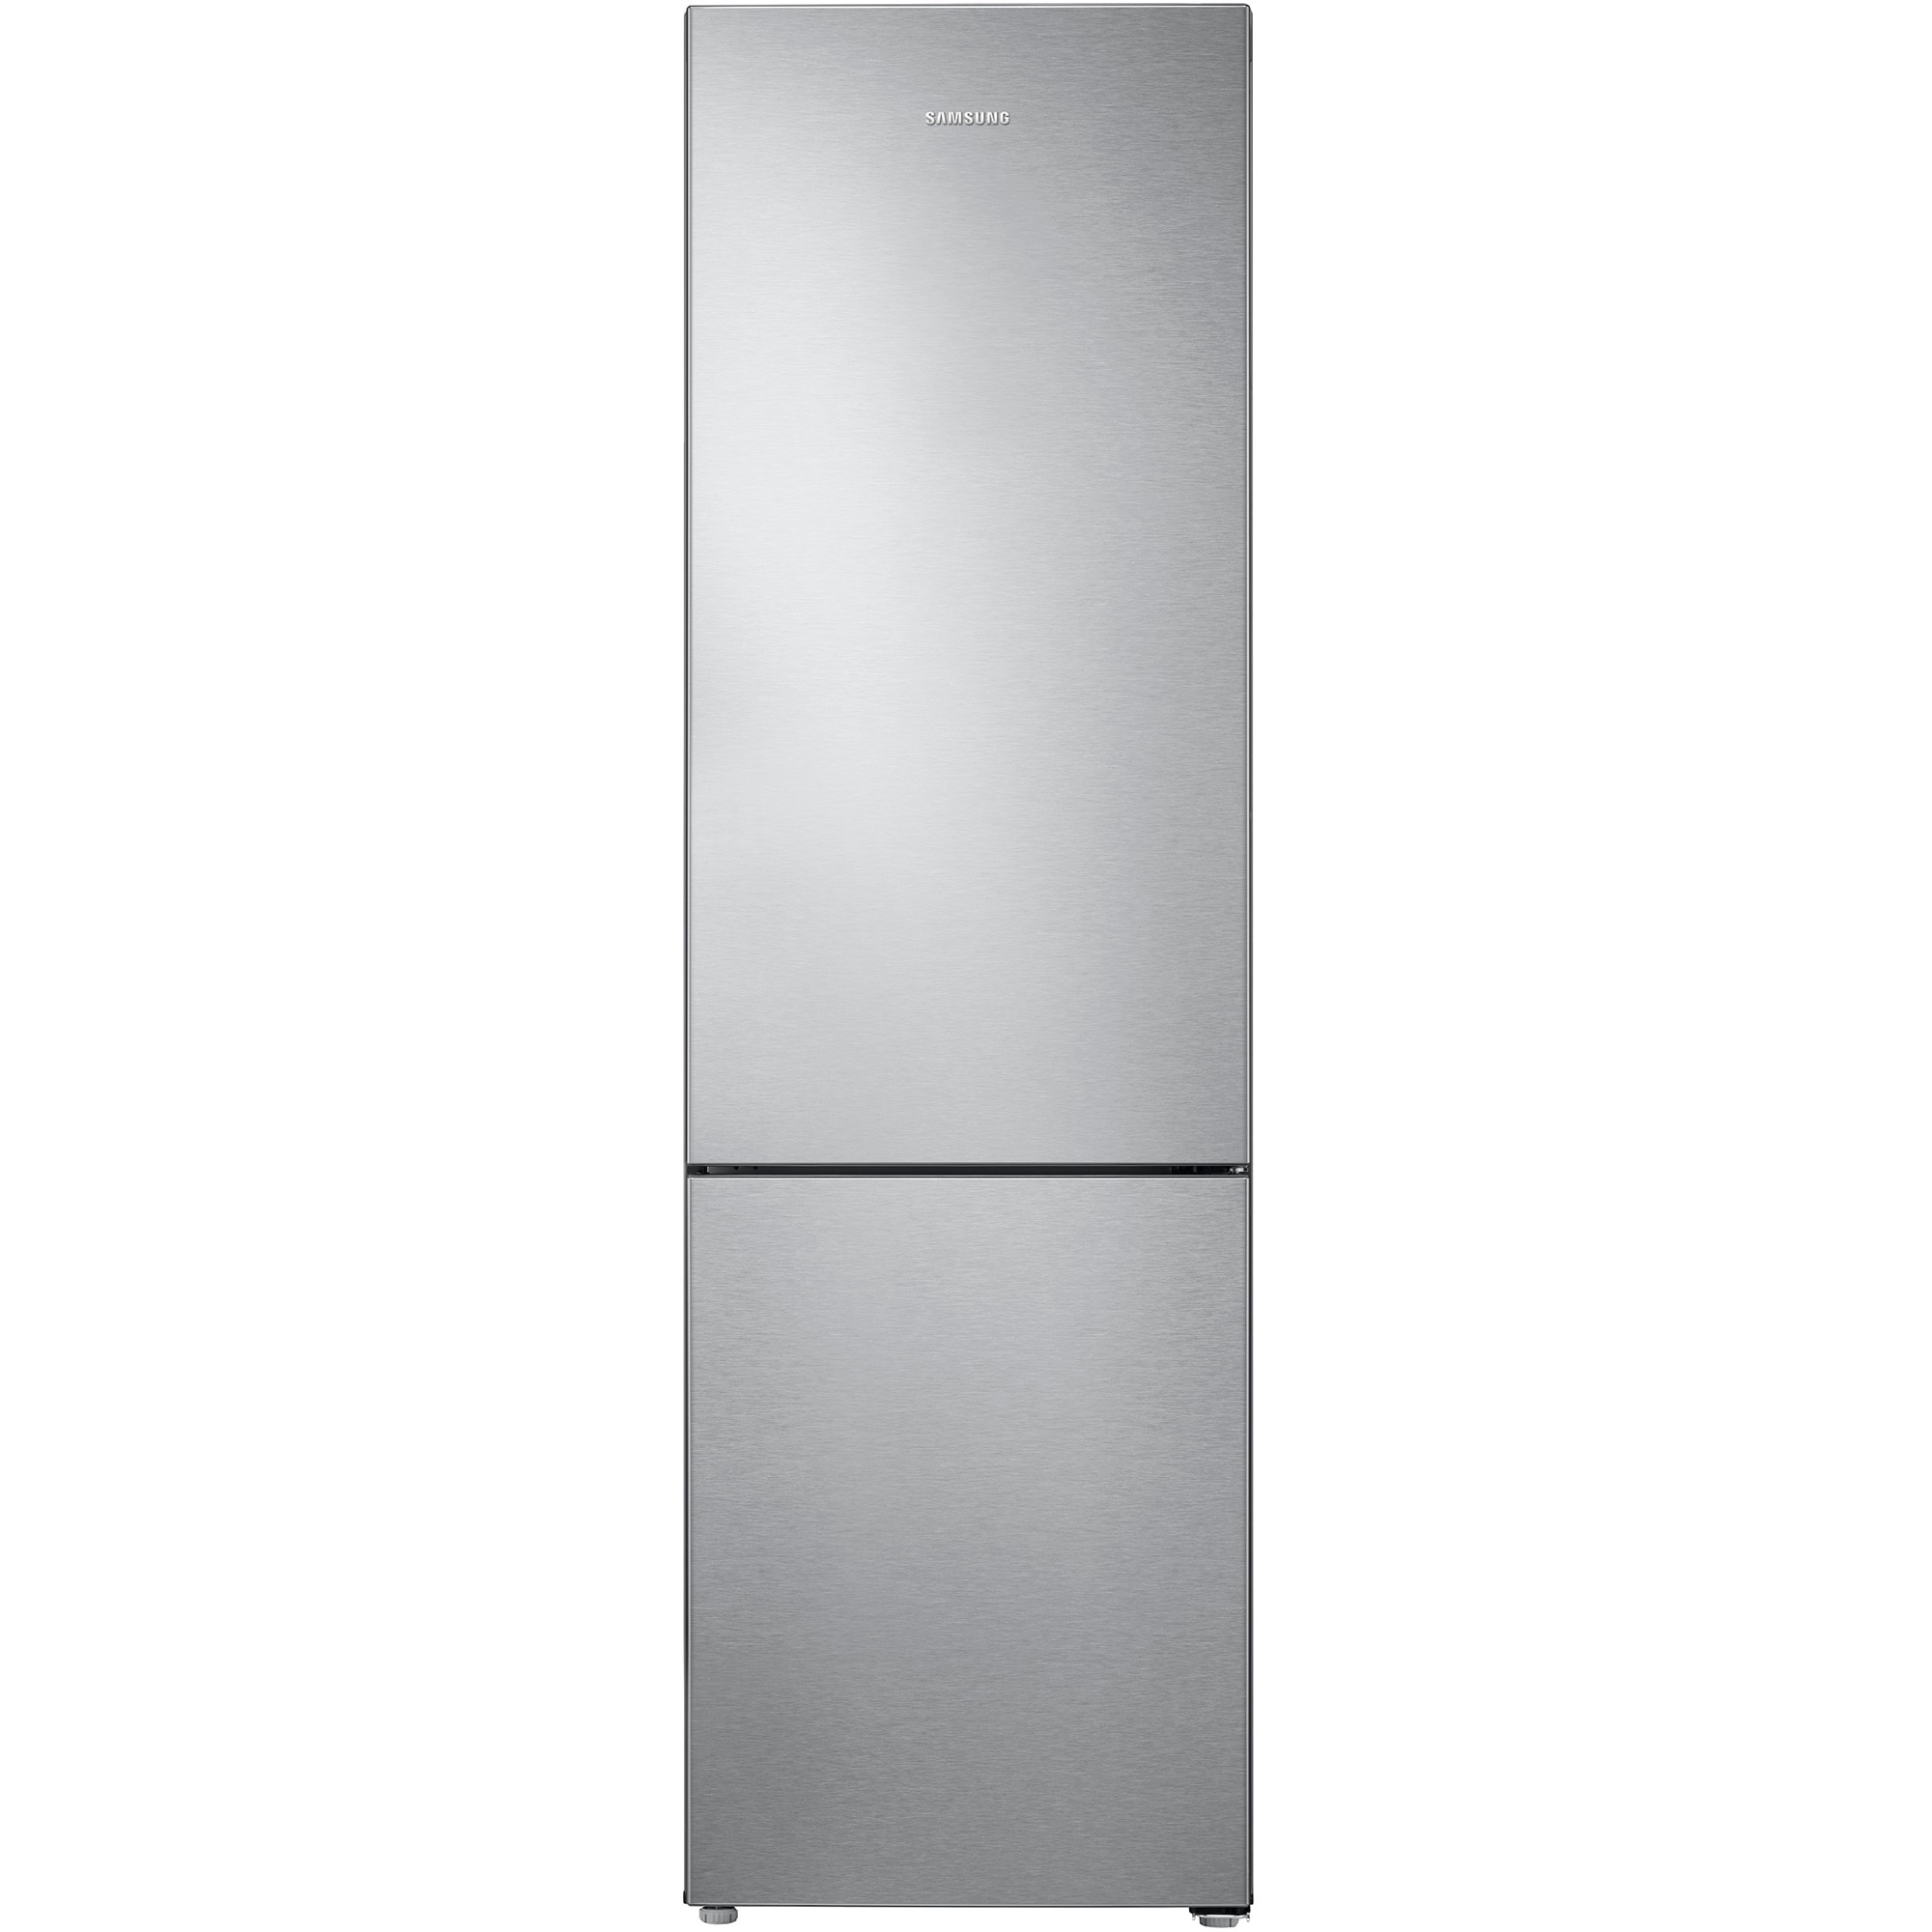 Хладилник Samsung RB37J5010SA с обем от 367 л.